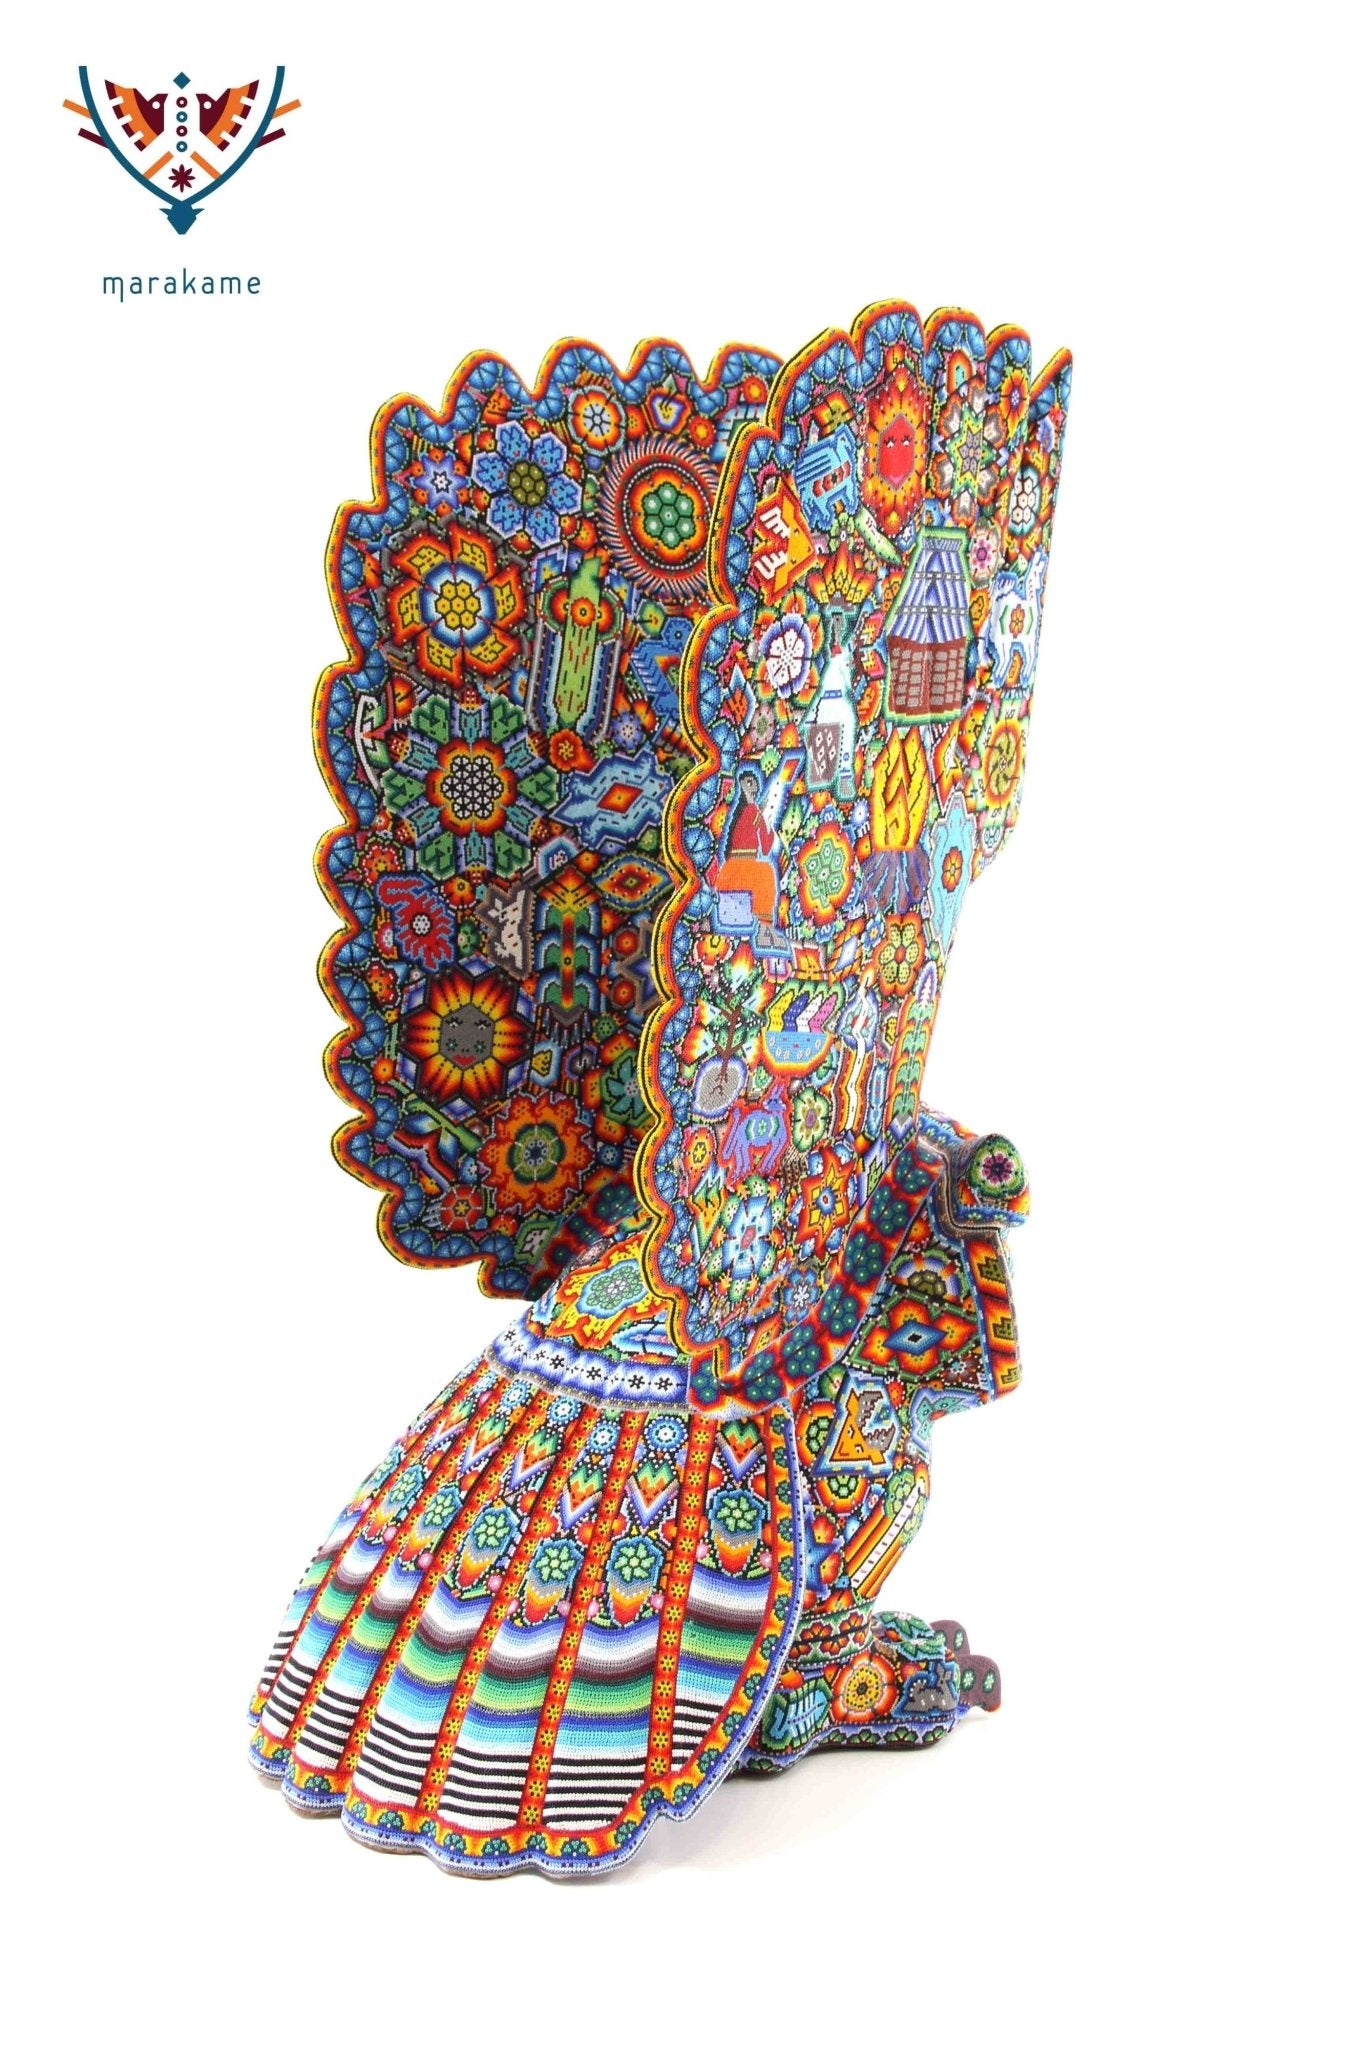 Copal-Skulptur - Haxianura - Huichol-Kunst - Marakame